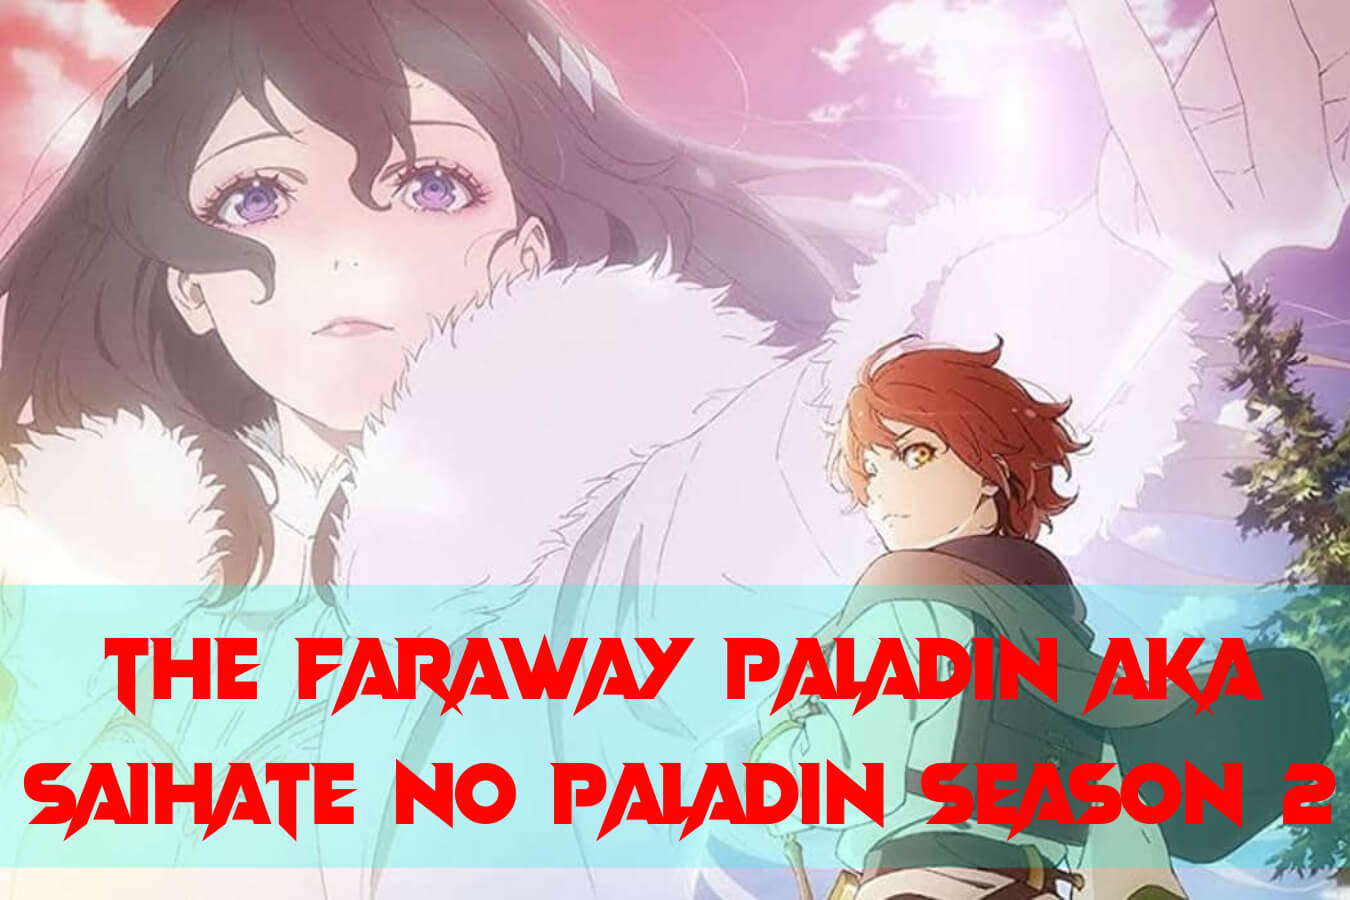 The Faraway Paladin AKA Saihate no Paladin season 2